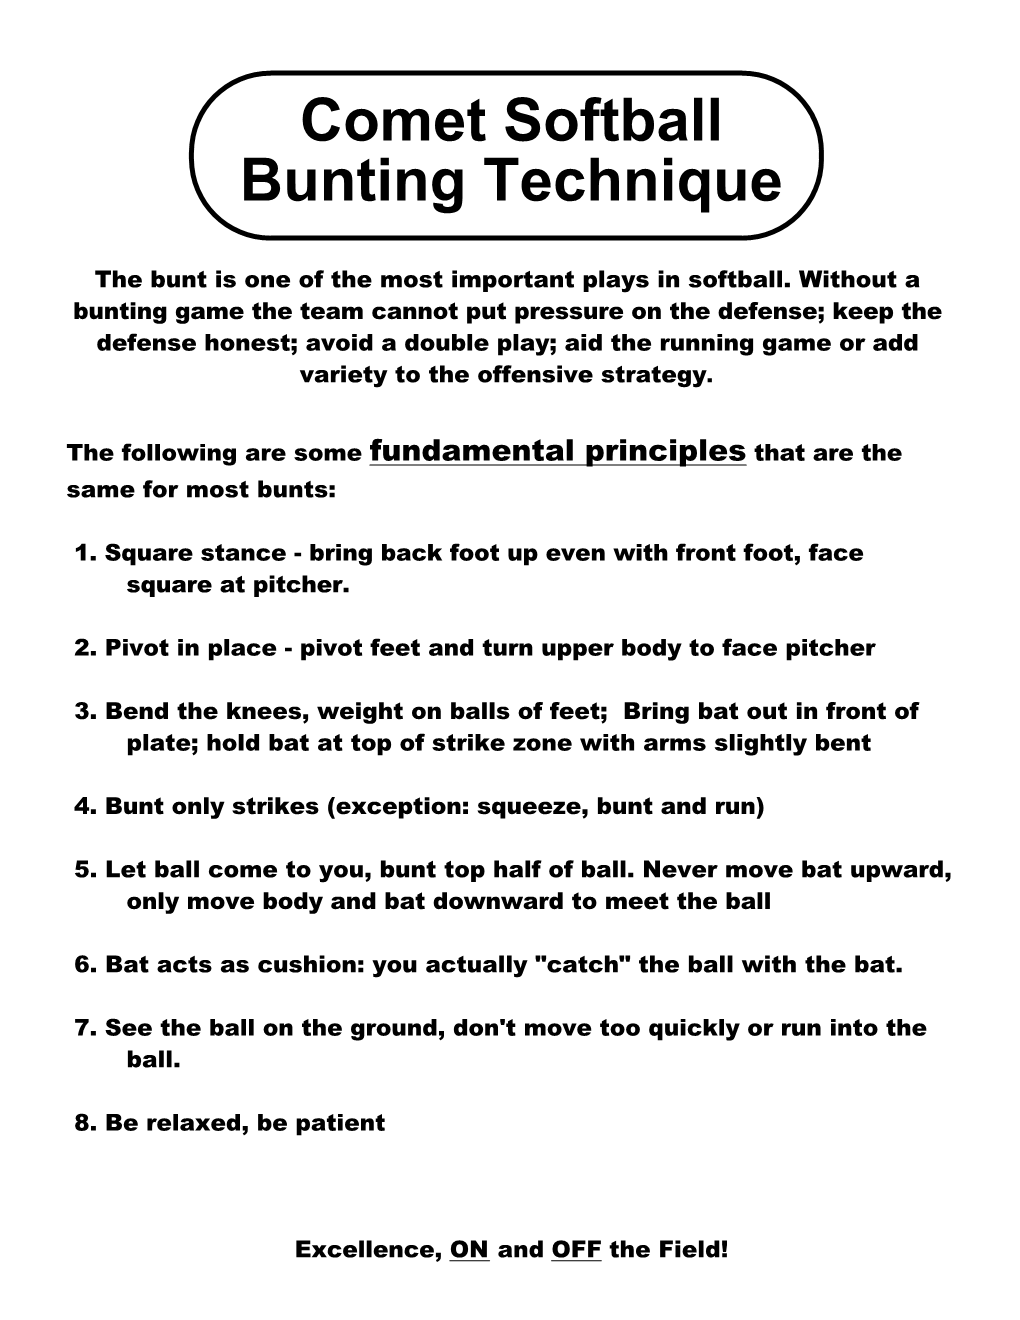 Comet Softball Bunting Technique